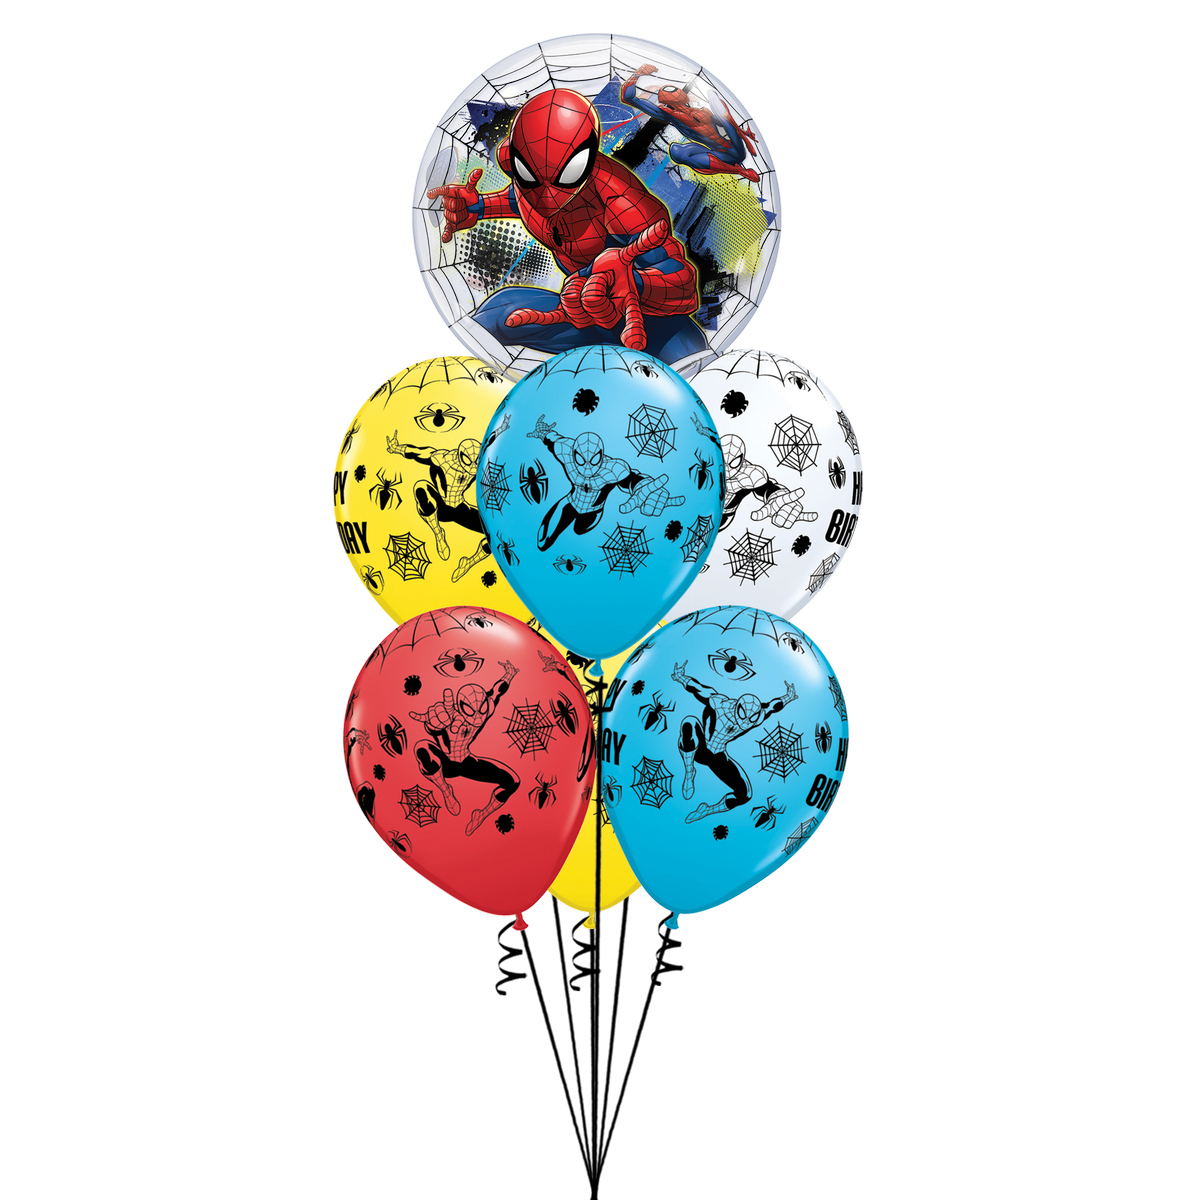 BIG BOUQUET SPIDERMAN - Balloon Express Shop Torino